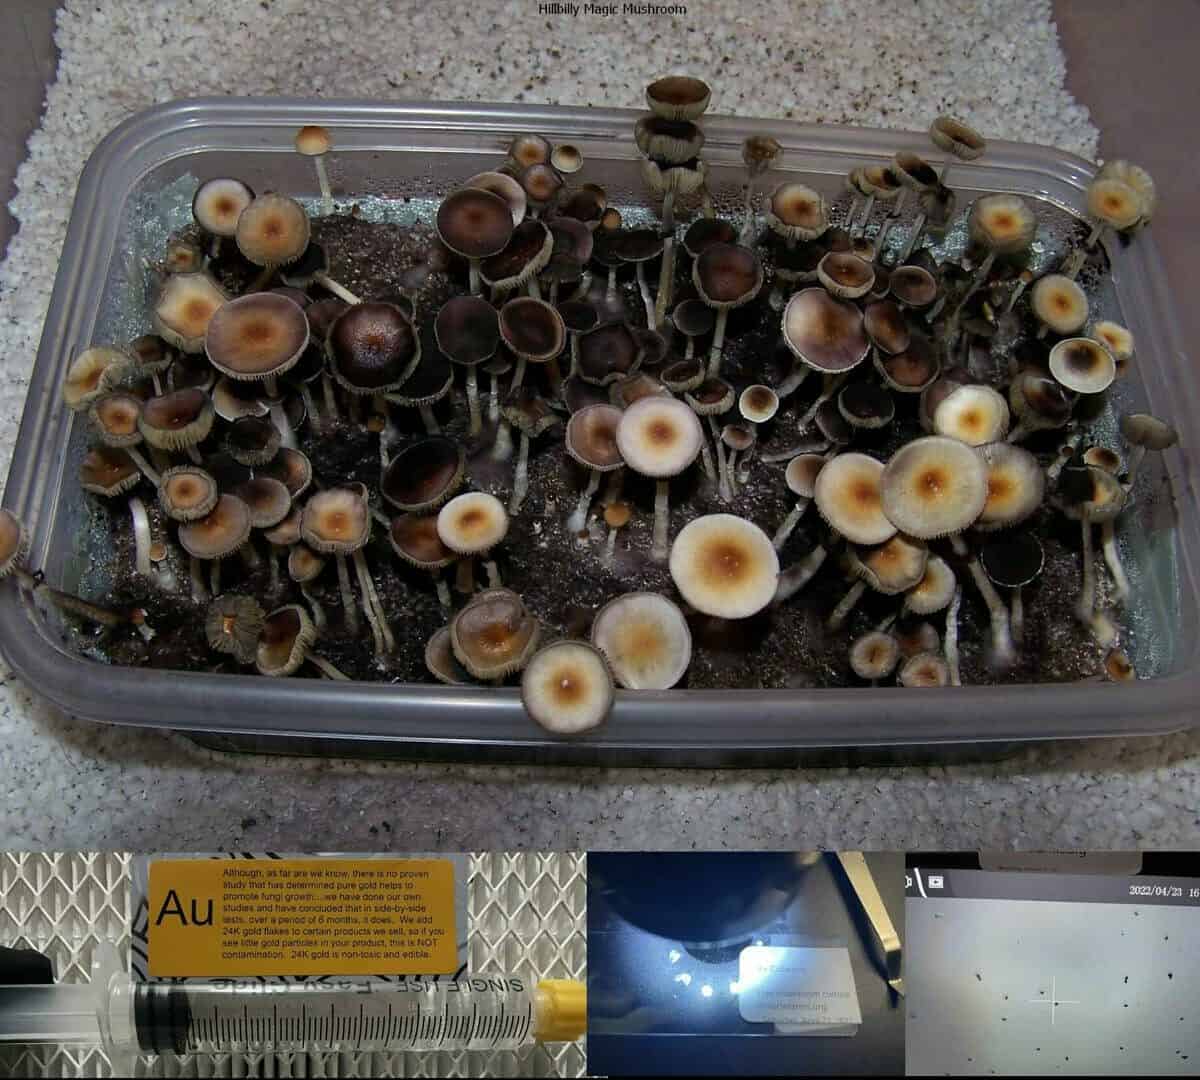 Hillbilly Magic Mushroom spore syringe